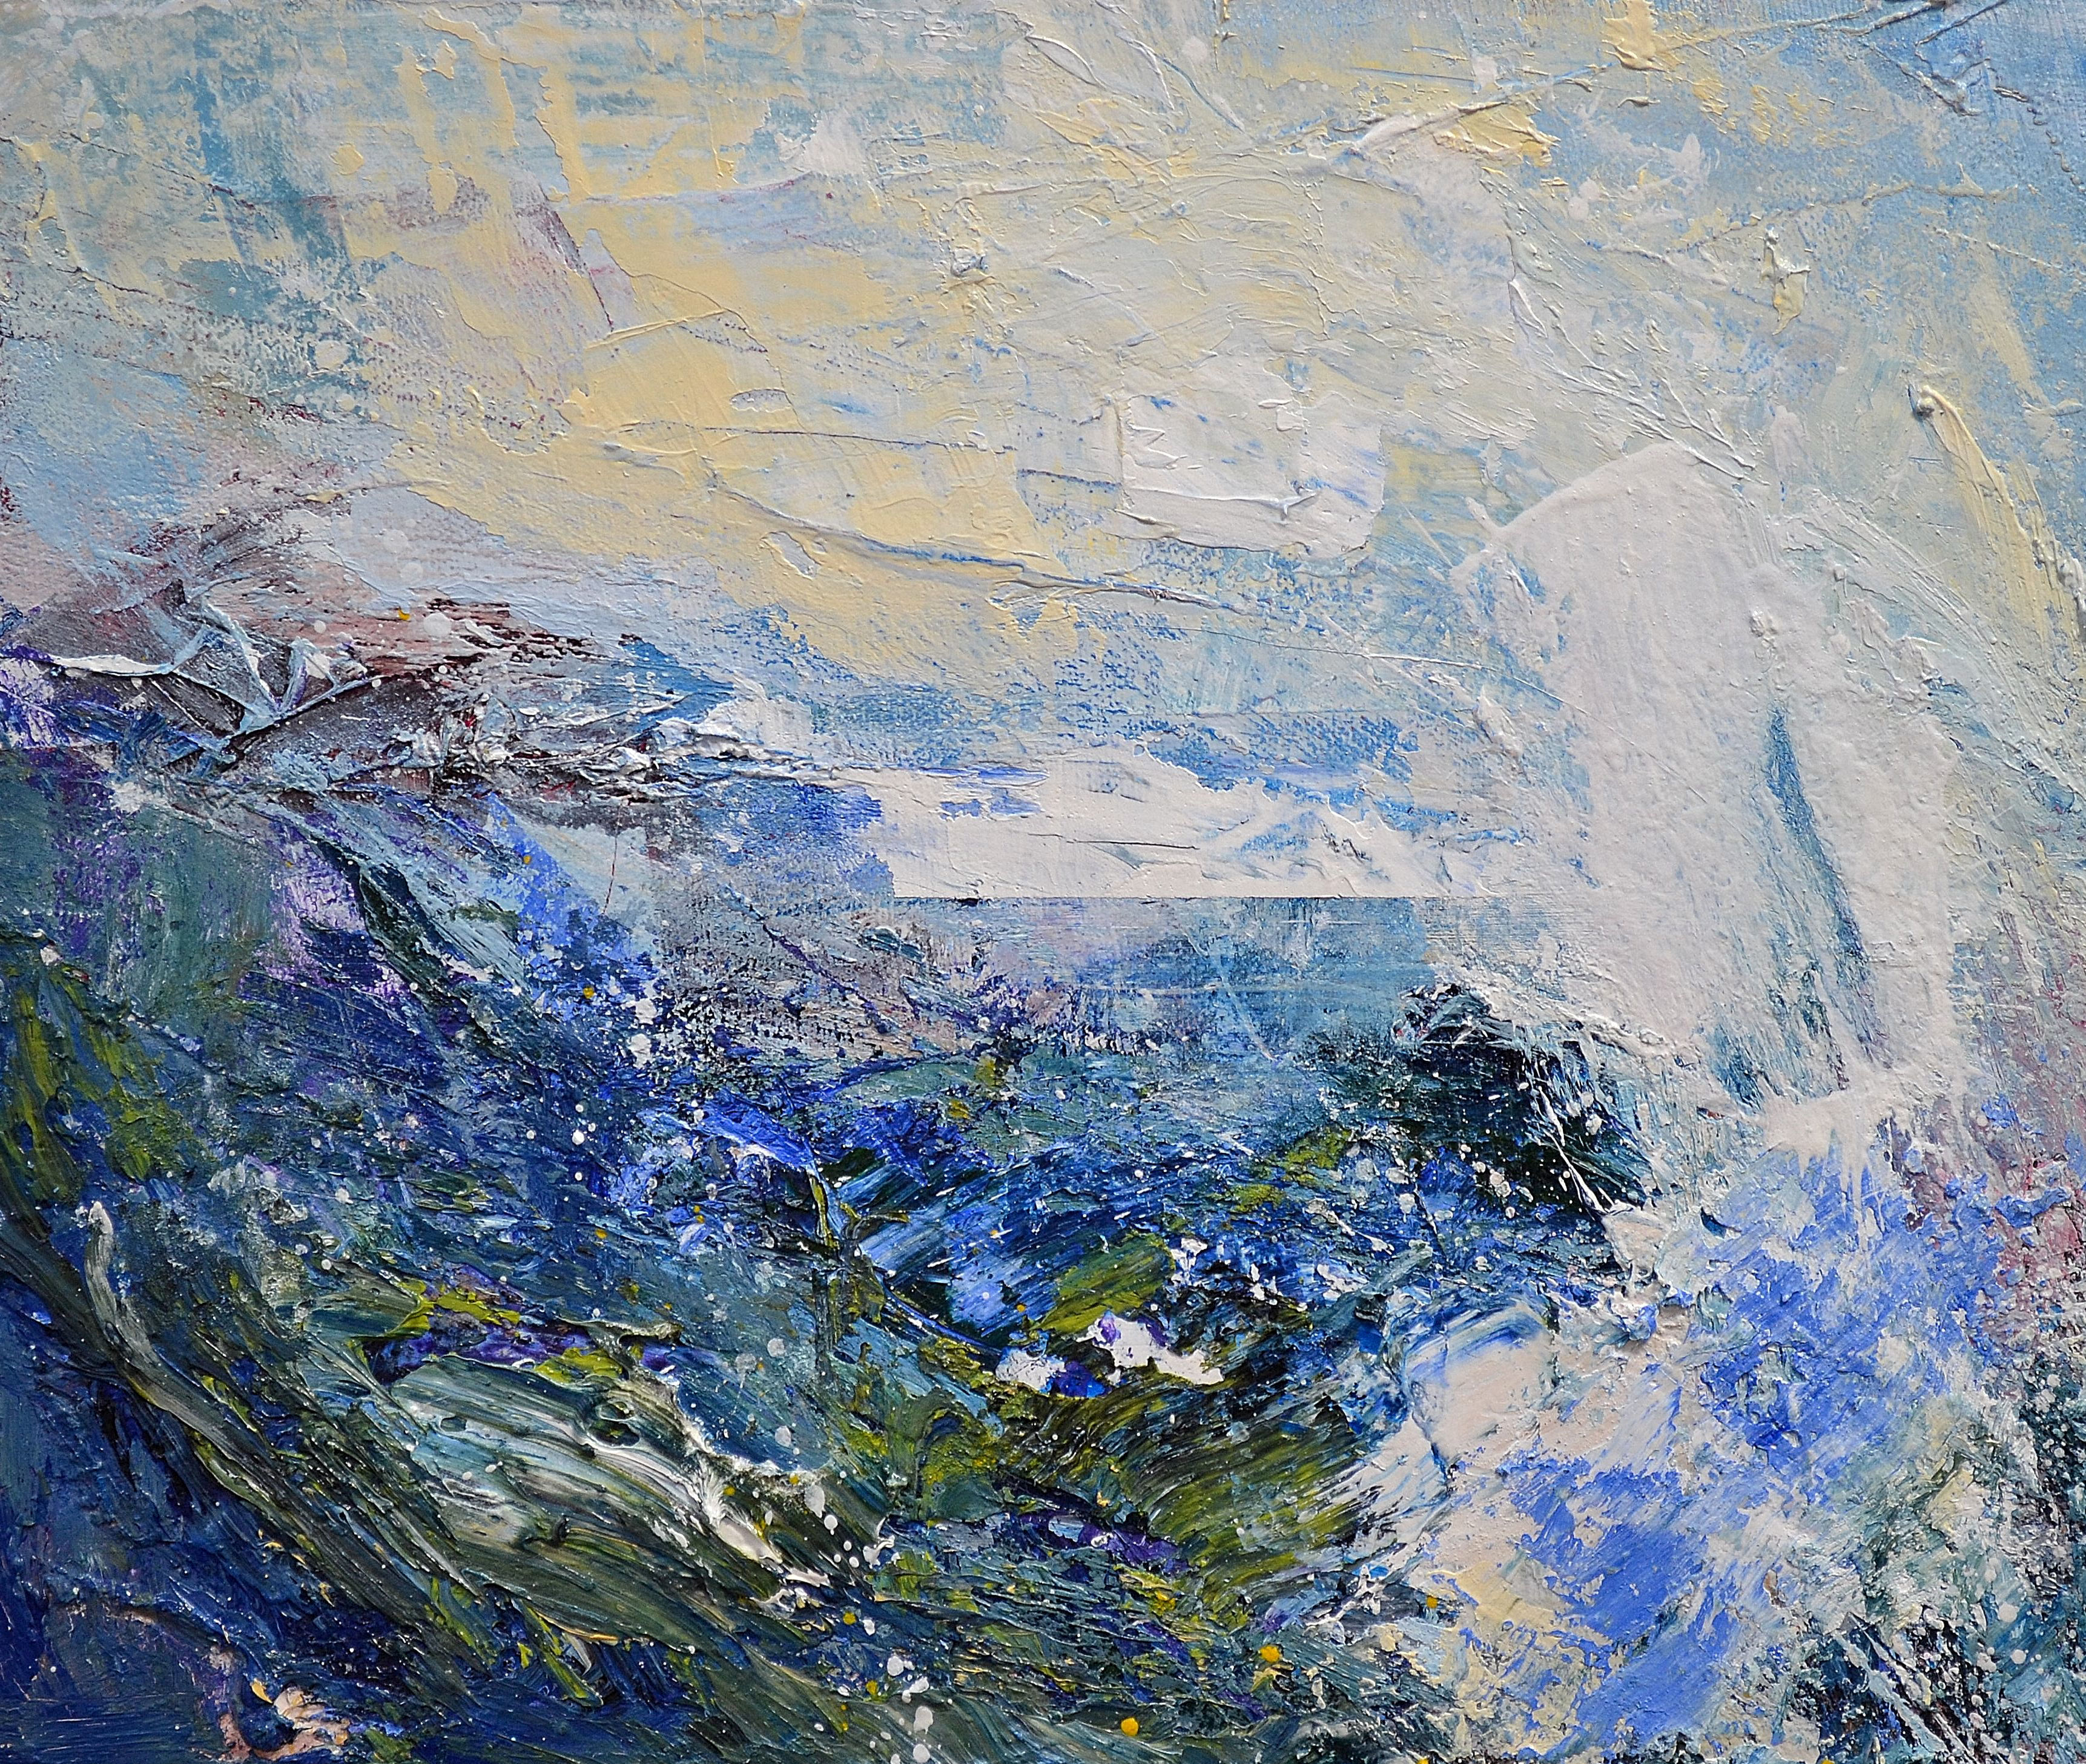 'Seaweed, Cove, Breaking Wave' by artist Matthew Bourne